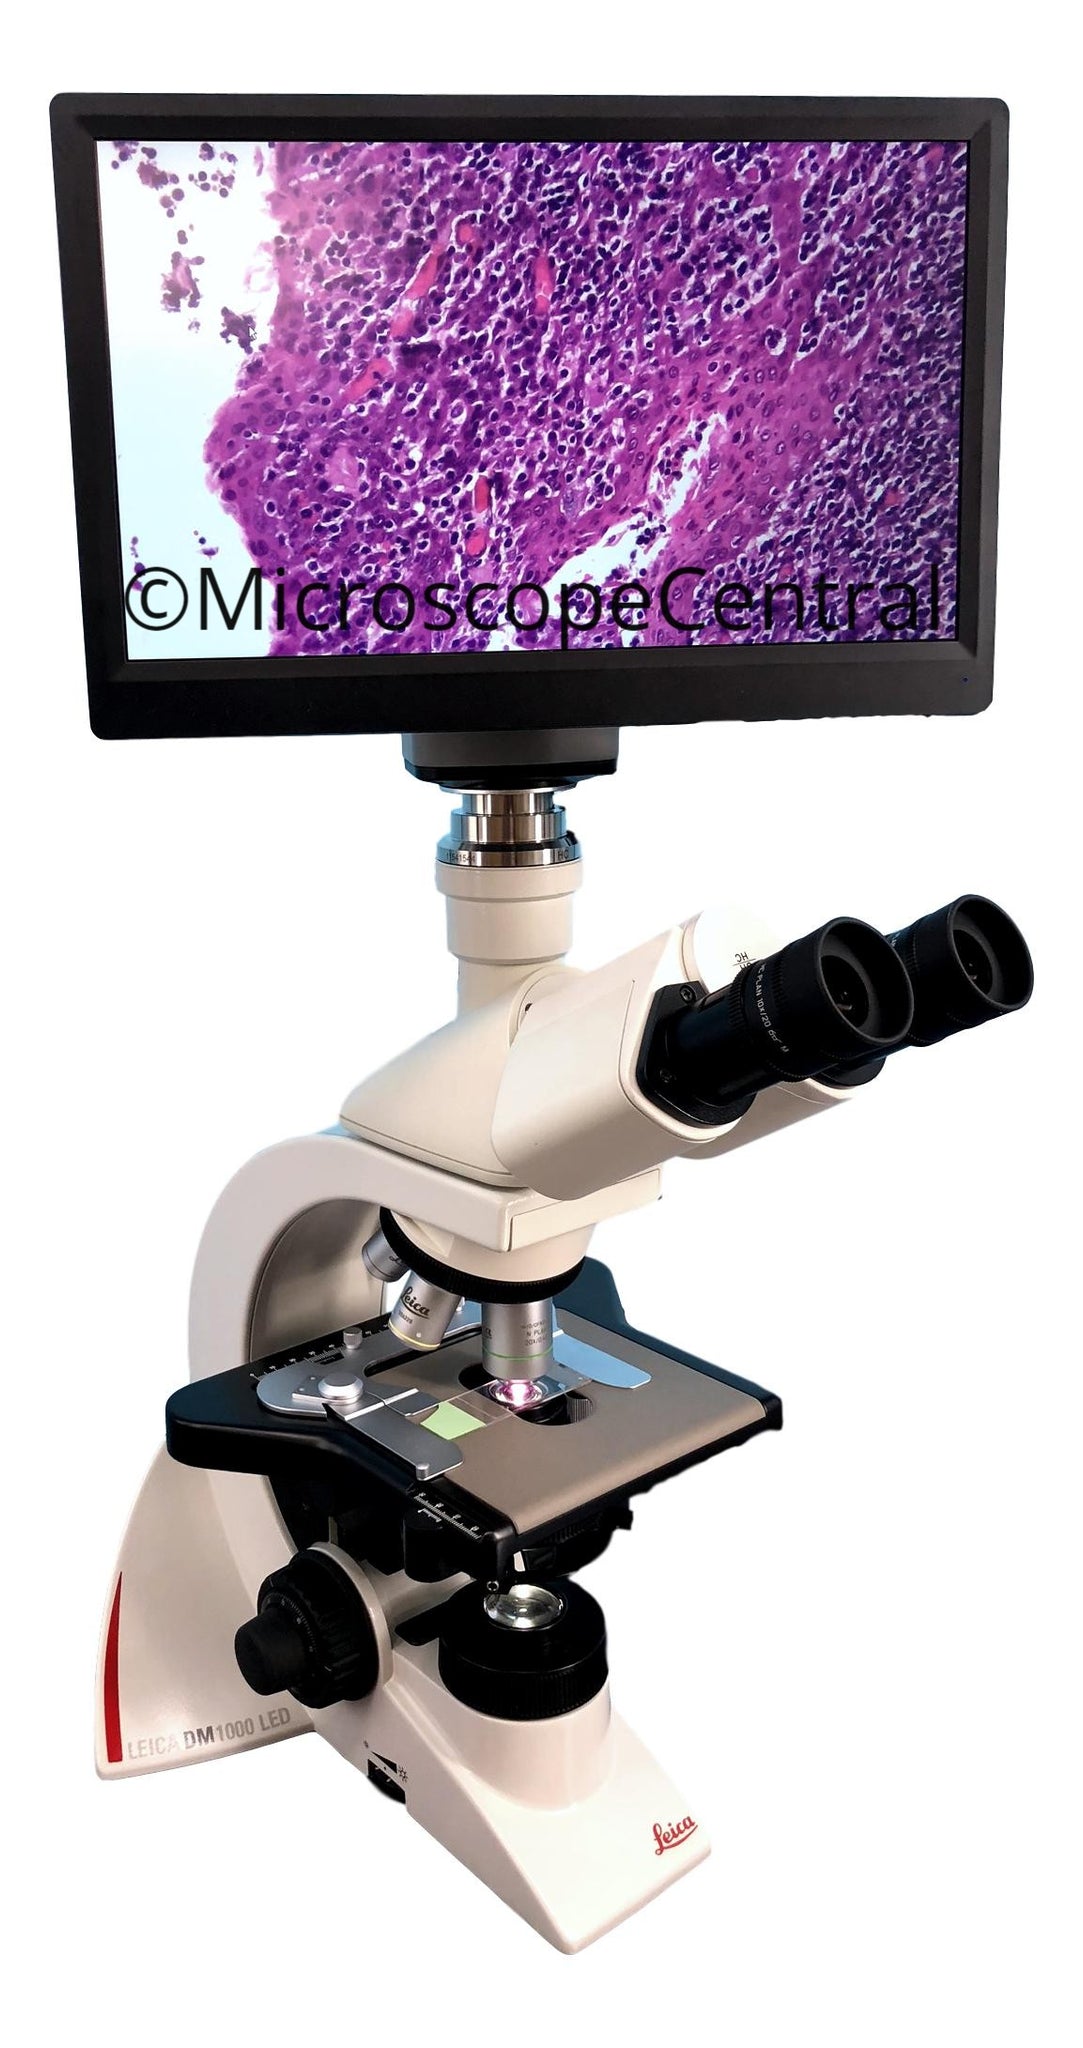 Leica DM1000 High Definition Digital Microscope